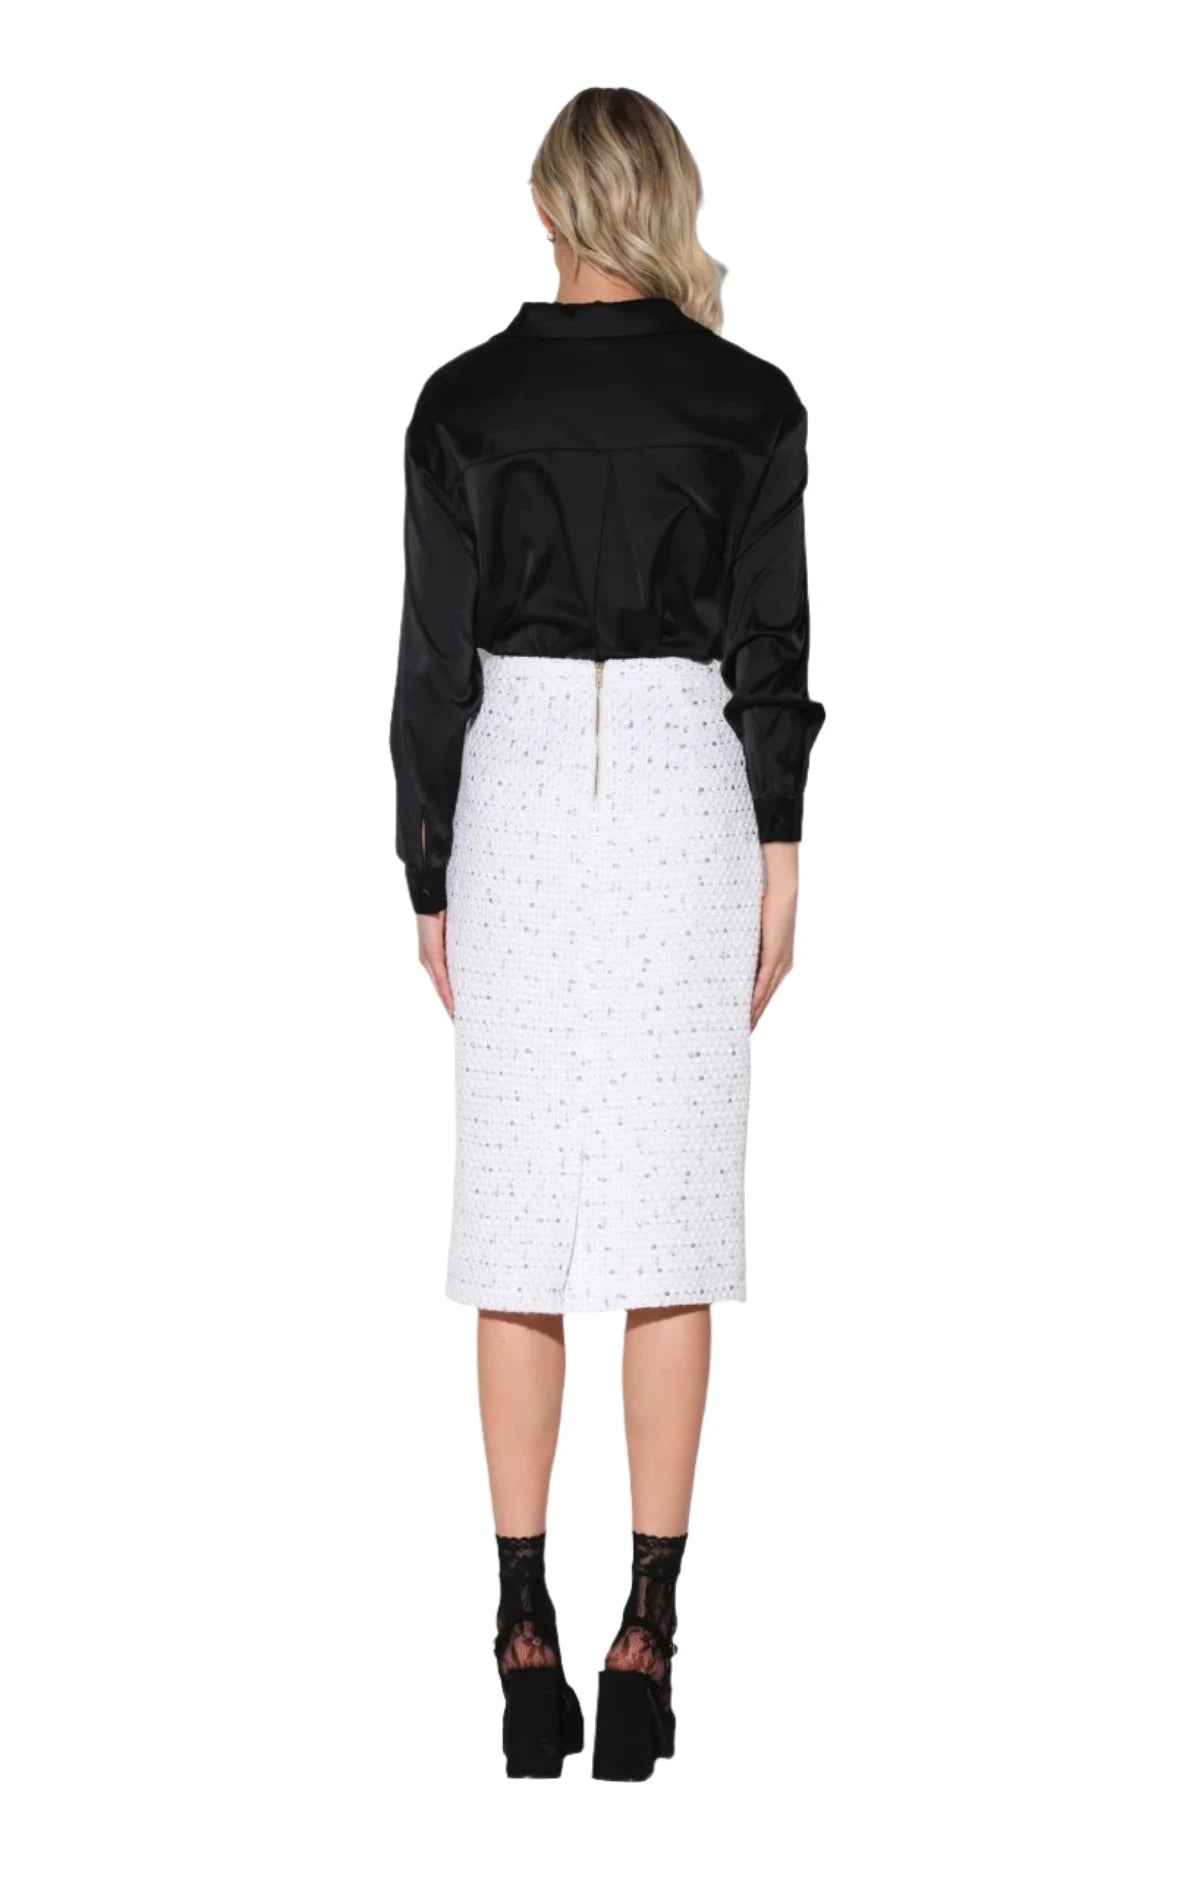 Walter Baker Melany Skirt Parisian Tweed in White and Black